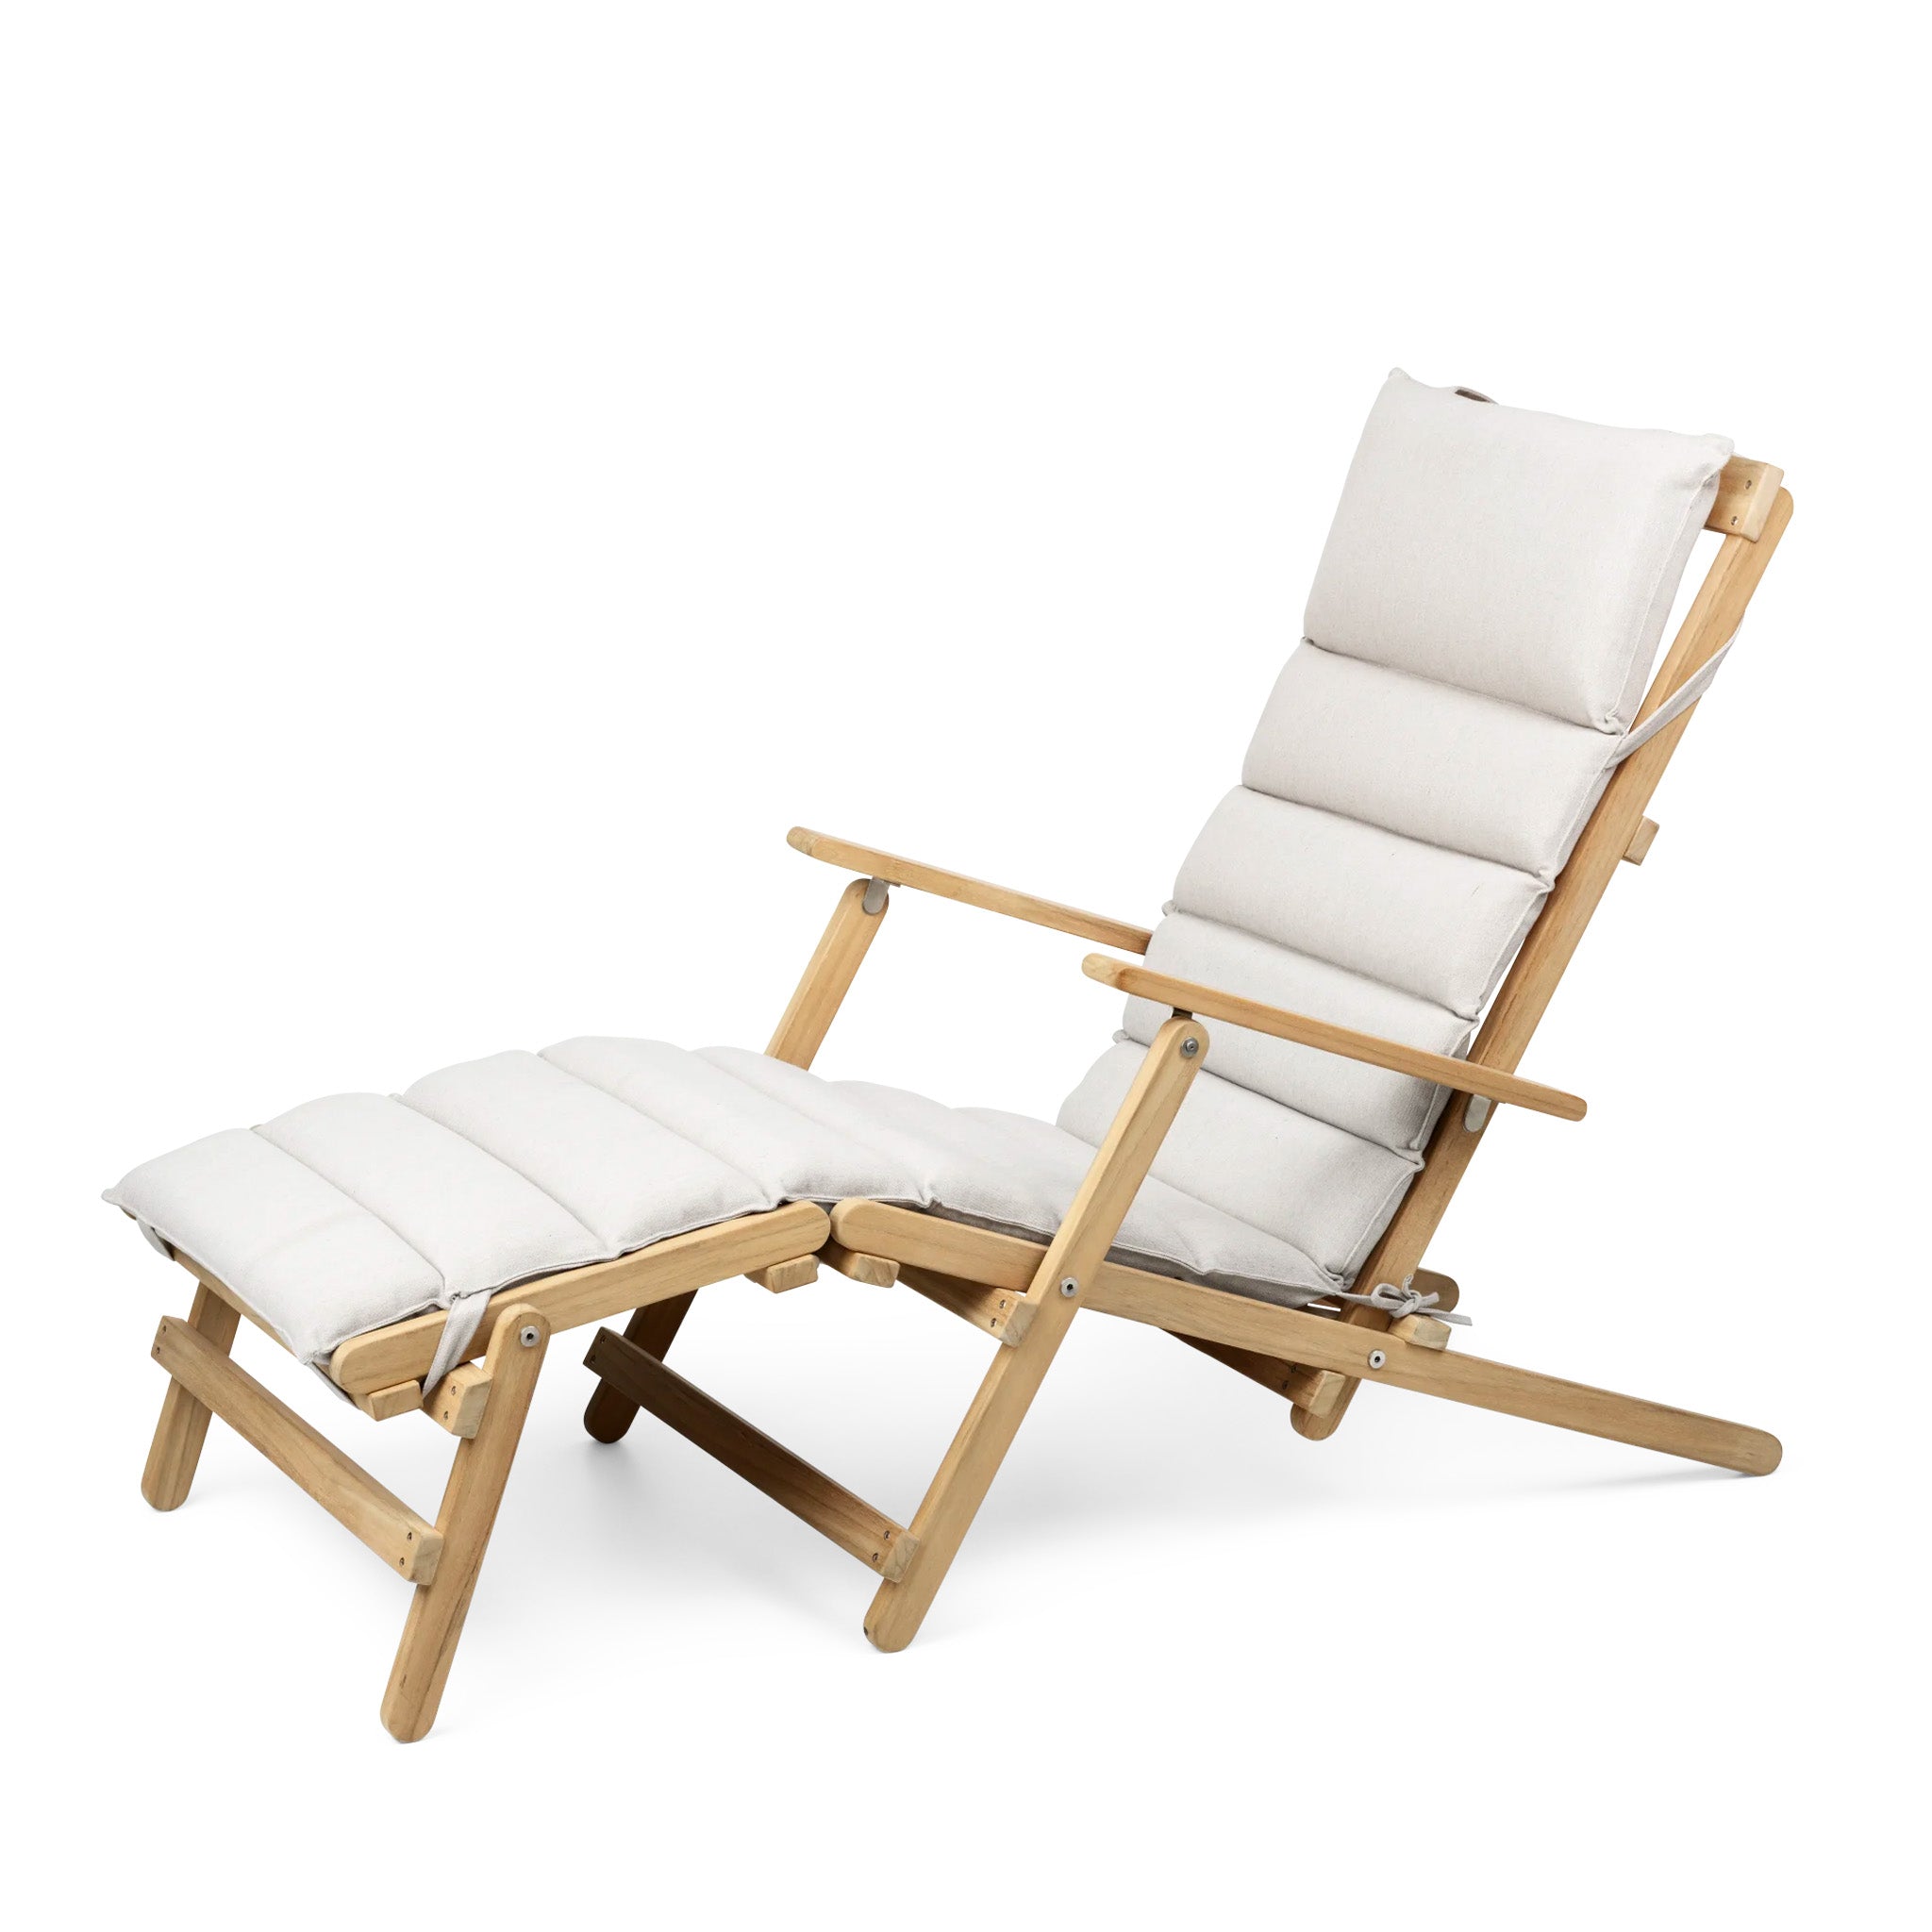 BM5565 Outdoor Deck Chair With Footrest by Børge Mogensen